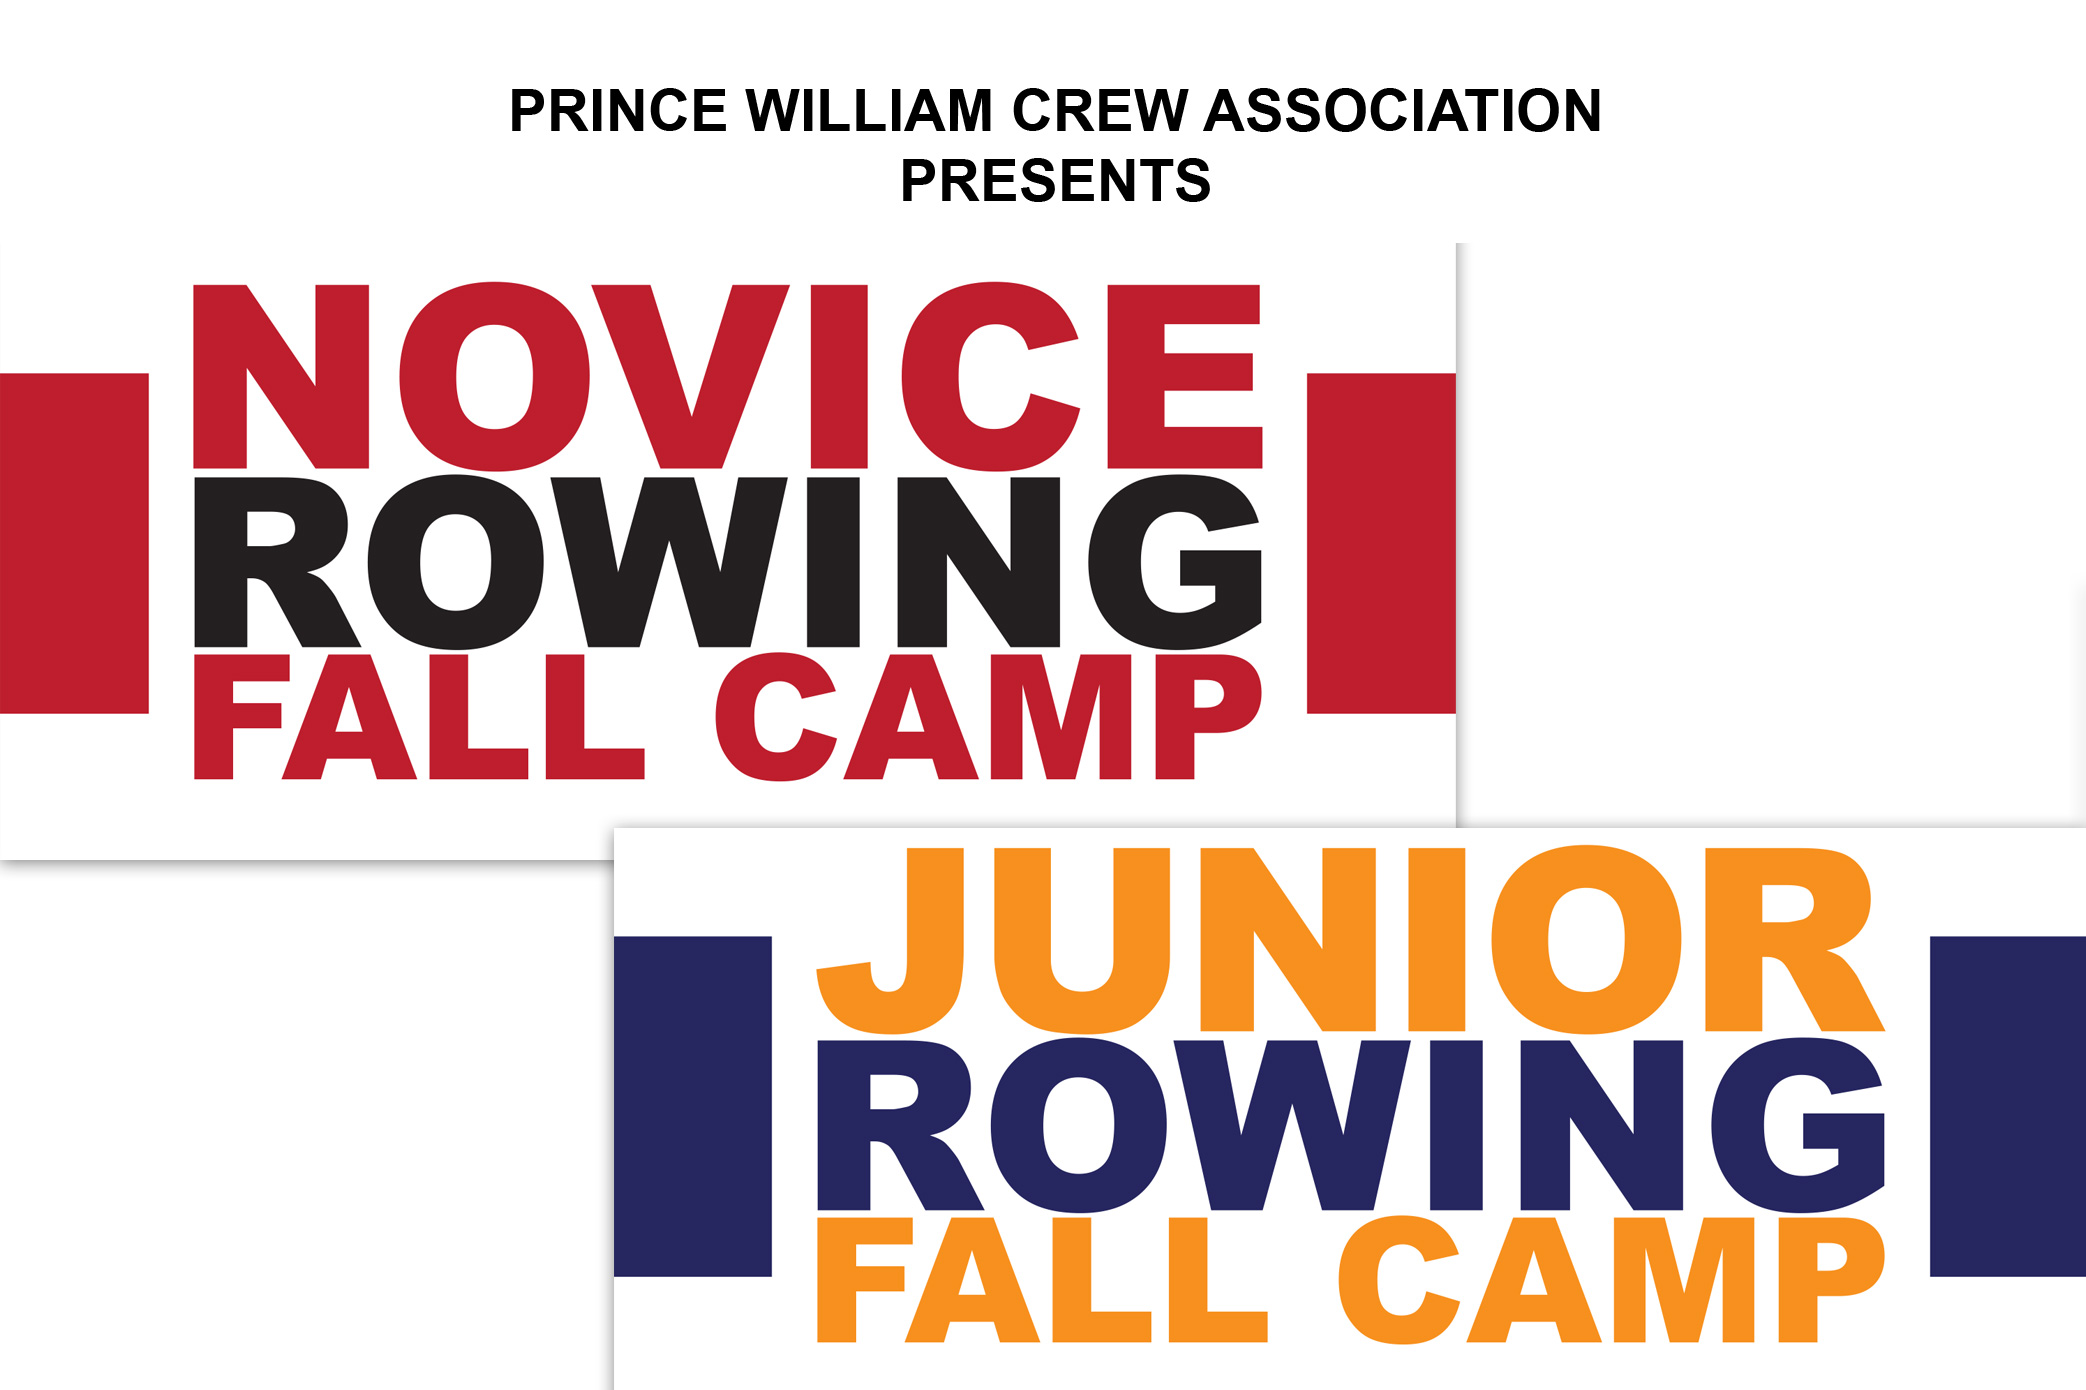 Prince William Crew Association Opens Fall Rowing Program